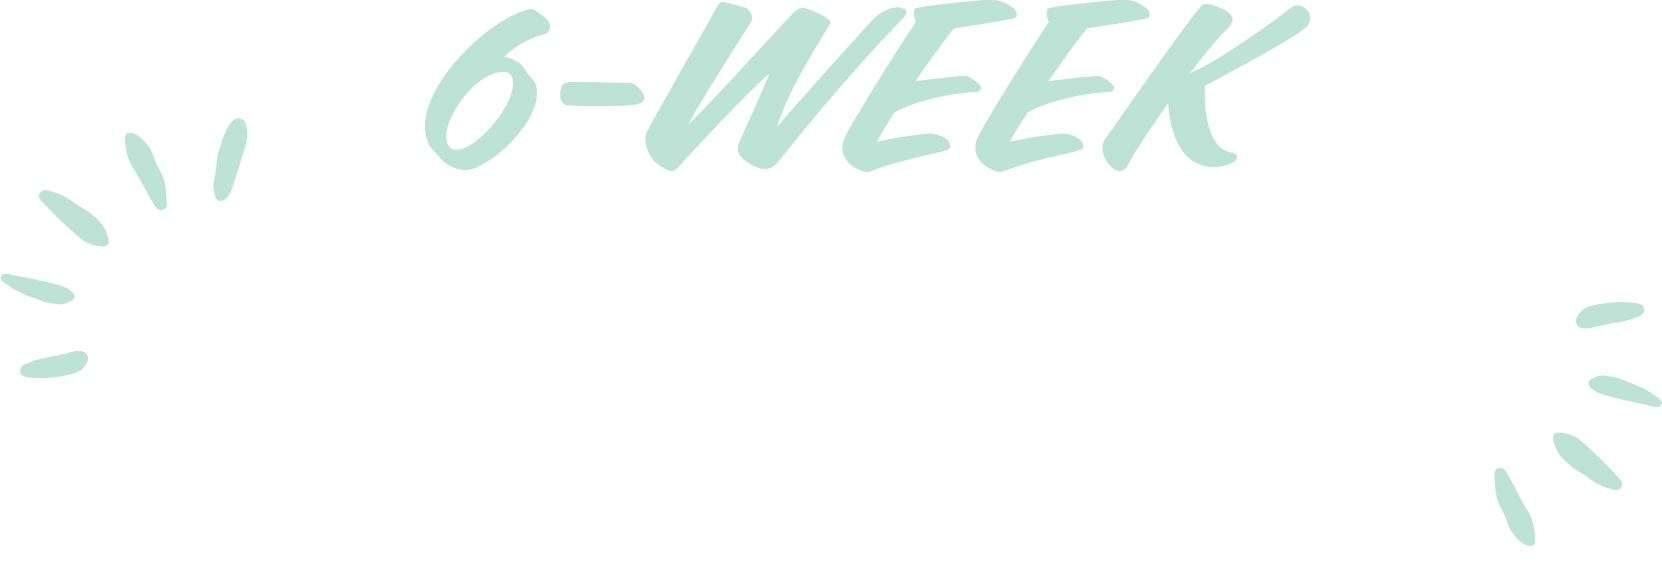 6-Week New Year Jumpstart Program